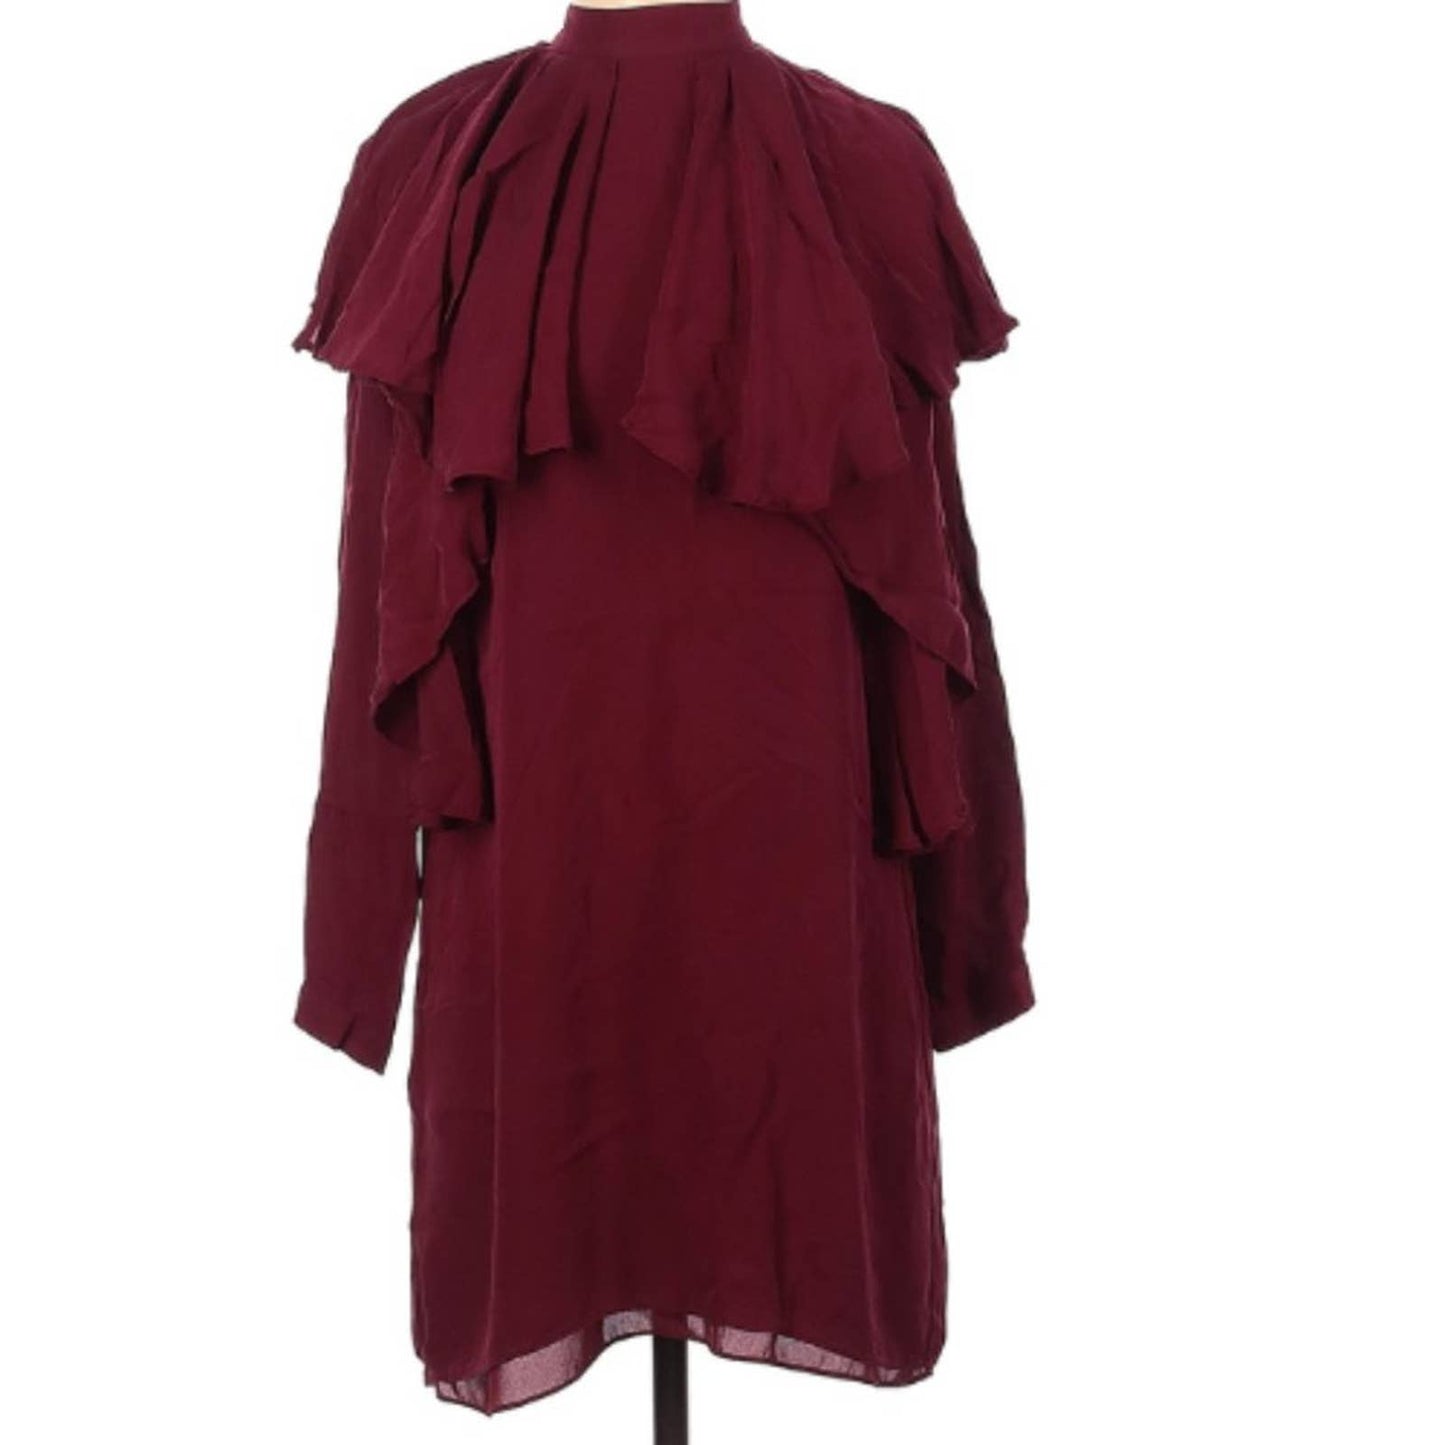 Nicole Miller Artelier Silk Shift Dress Size Medium